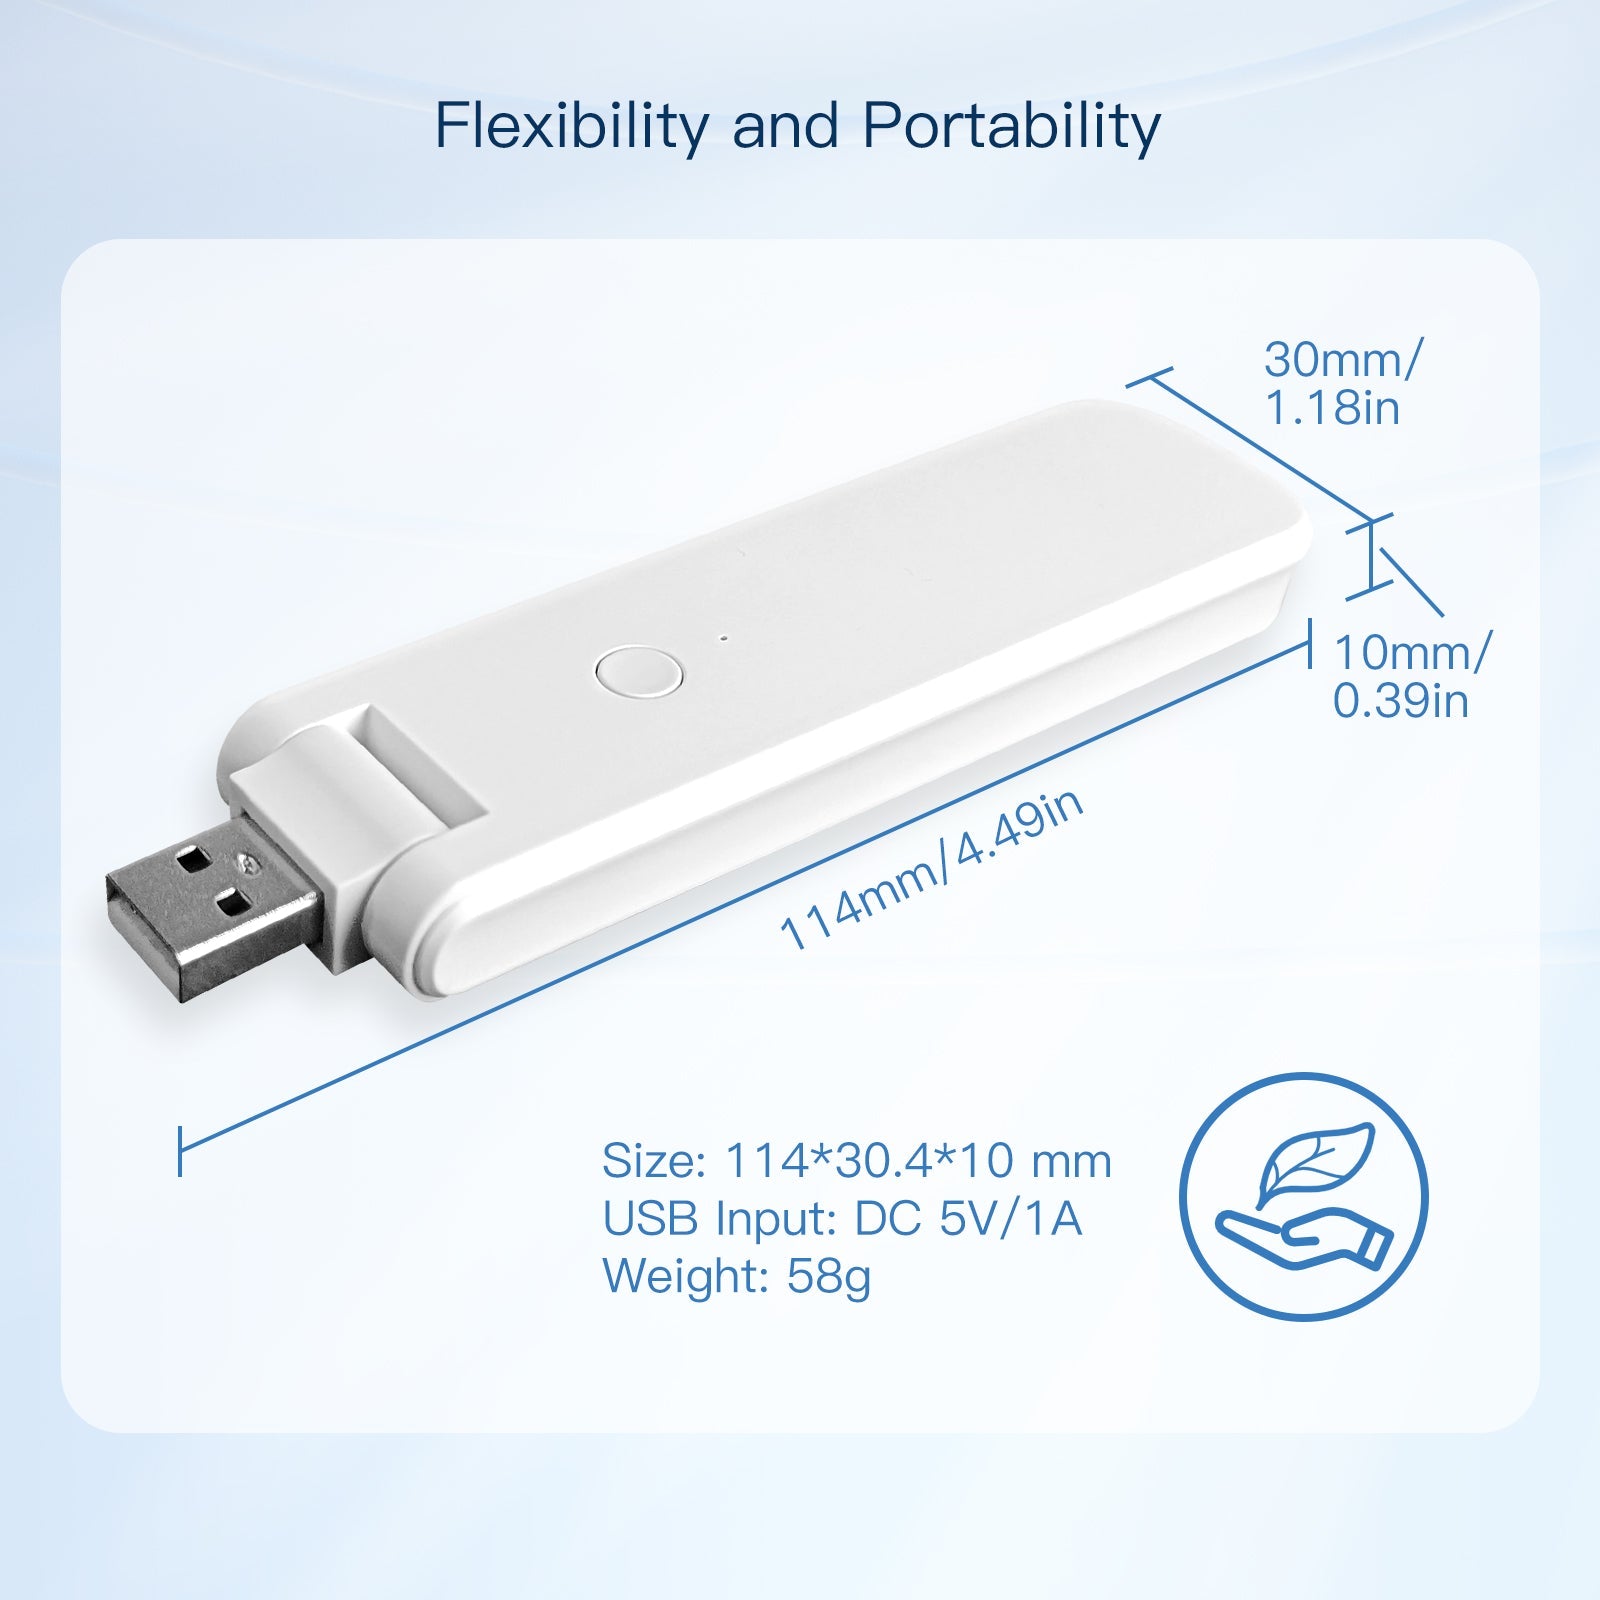 MOES Rotatable Hub, Smart WiFi USB Multi-mode Gateway